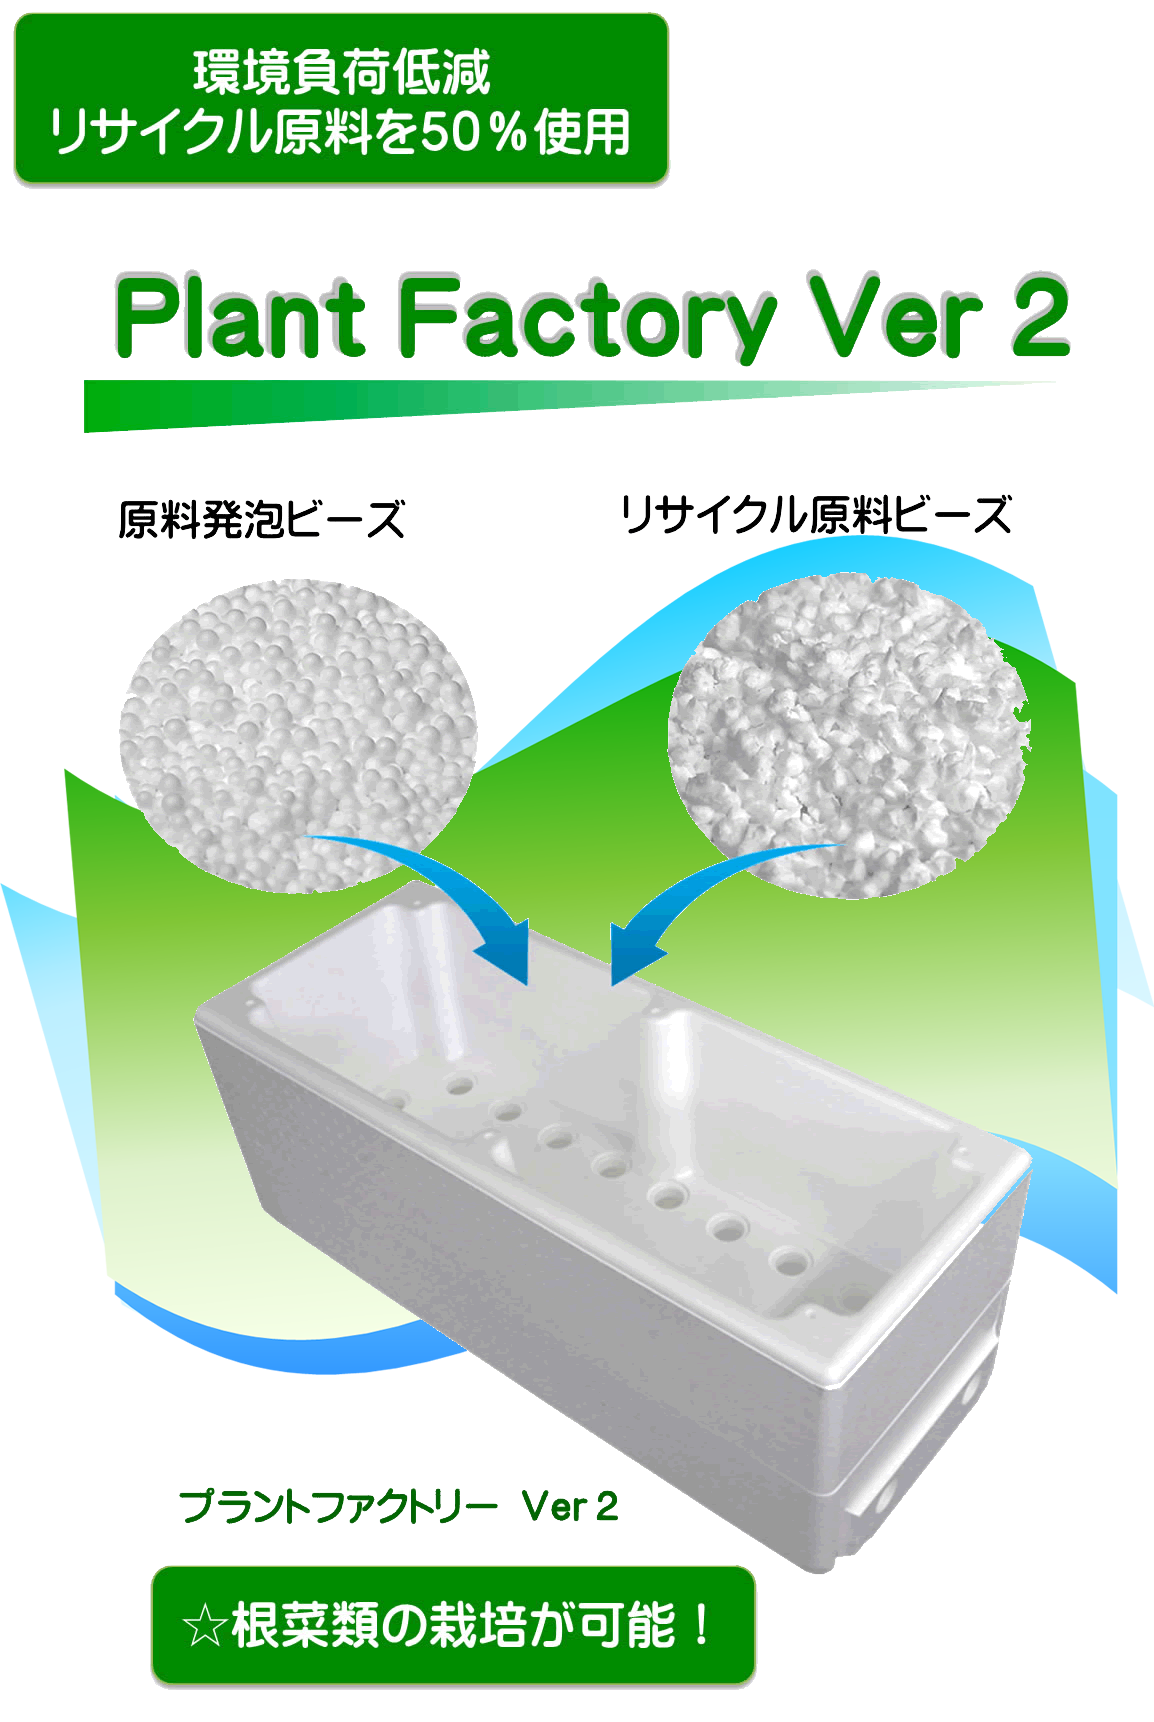 plant_factory_ver2